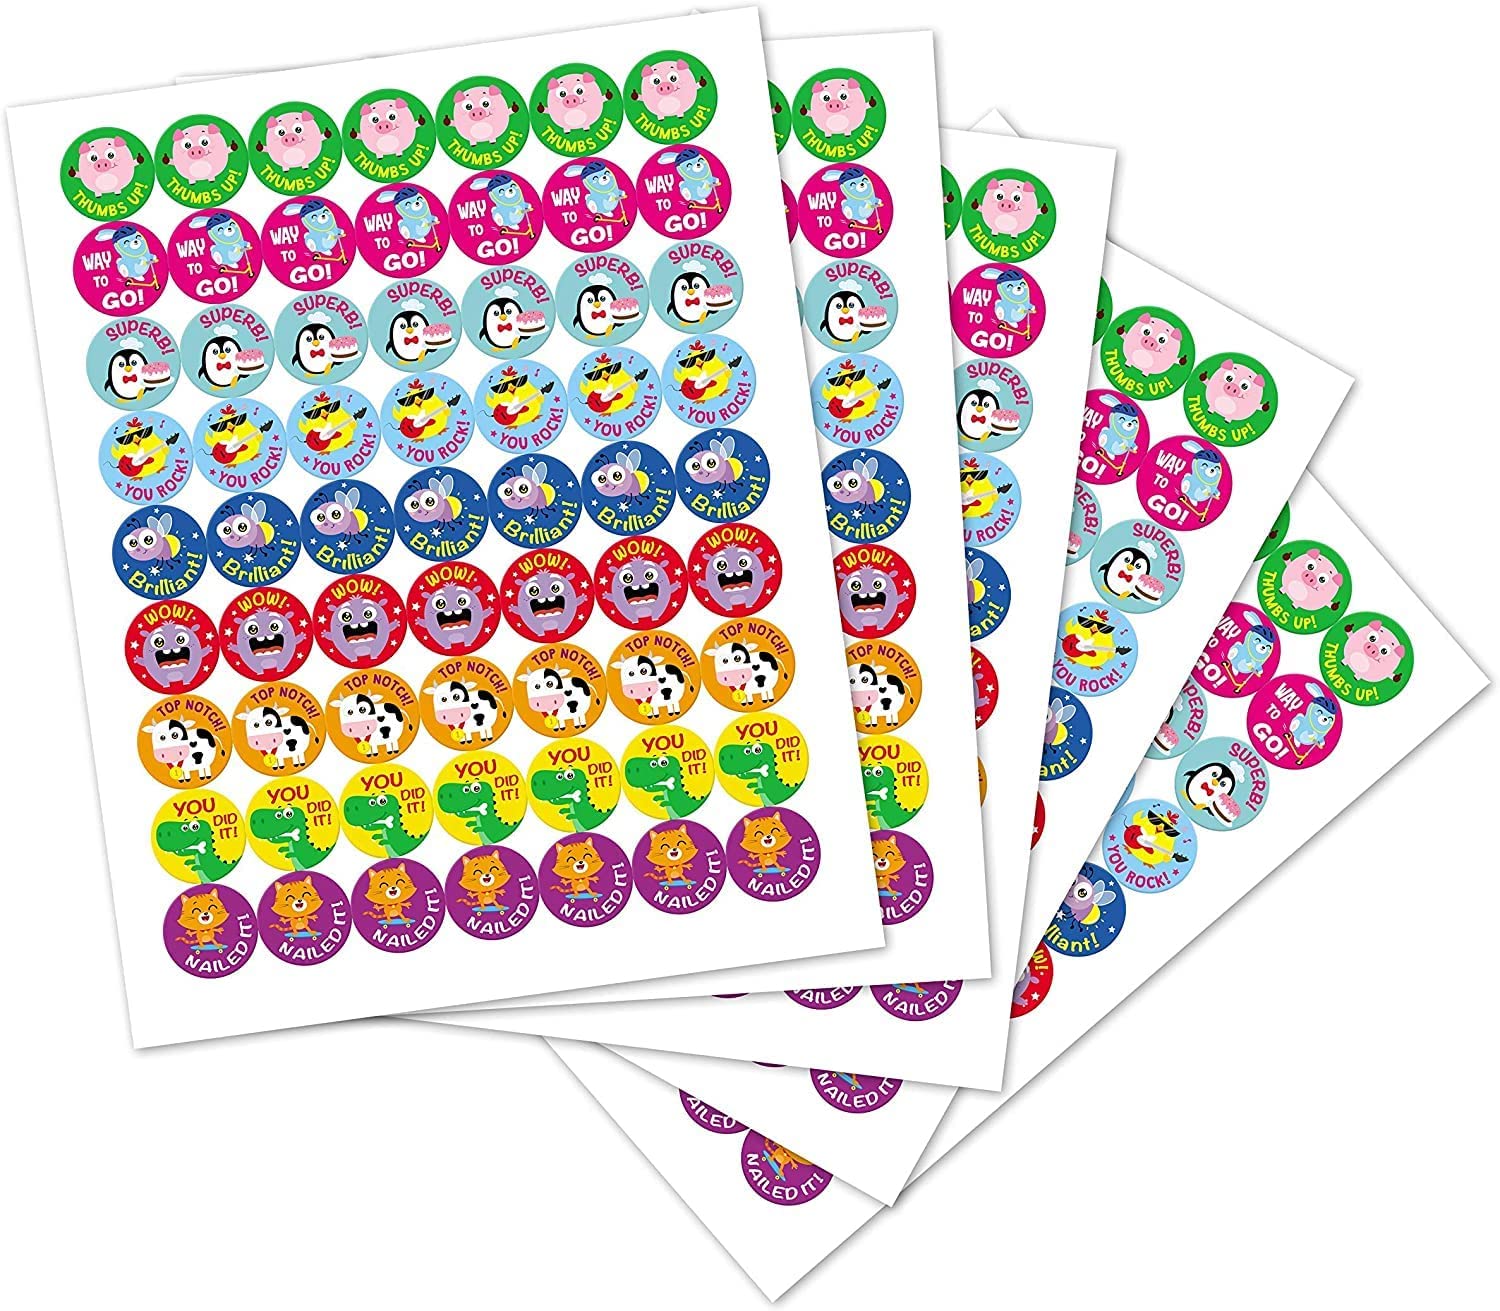 Circular sticker designed with cartoon shapes